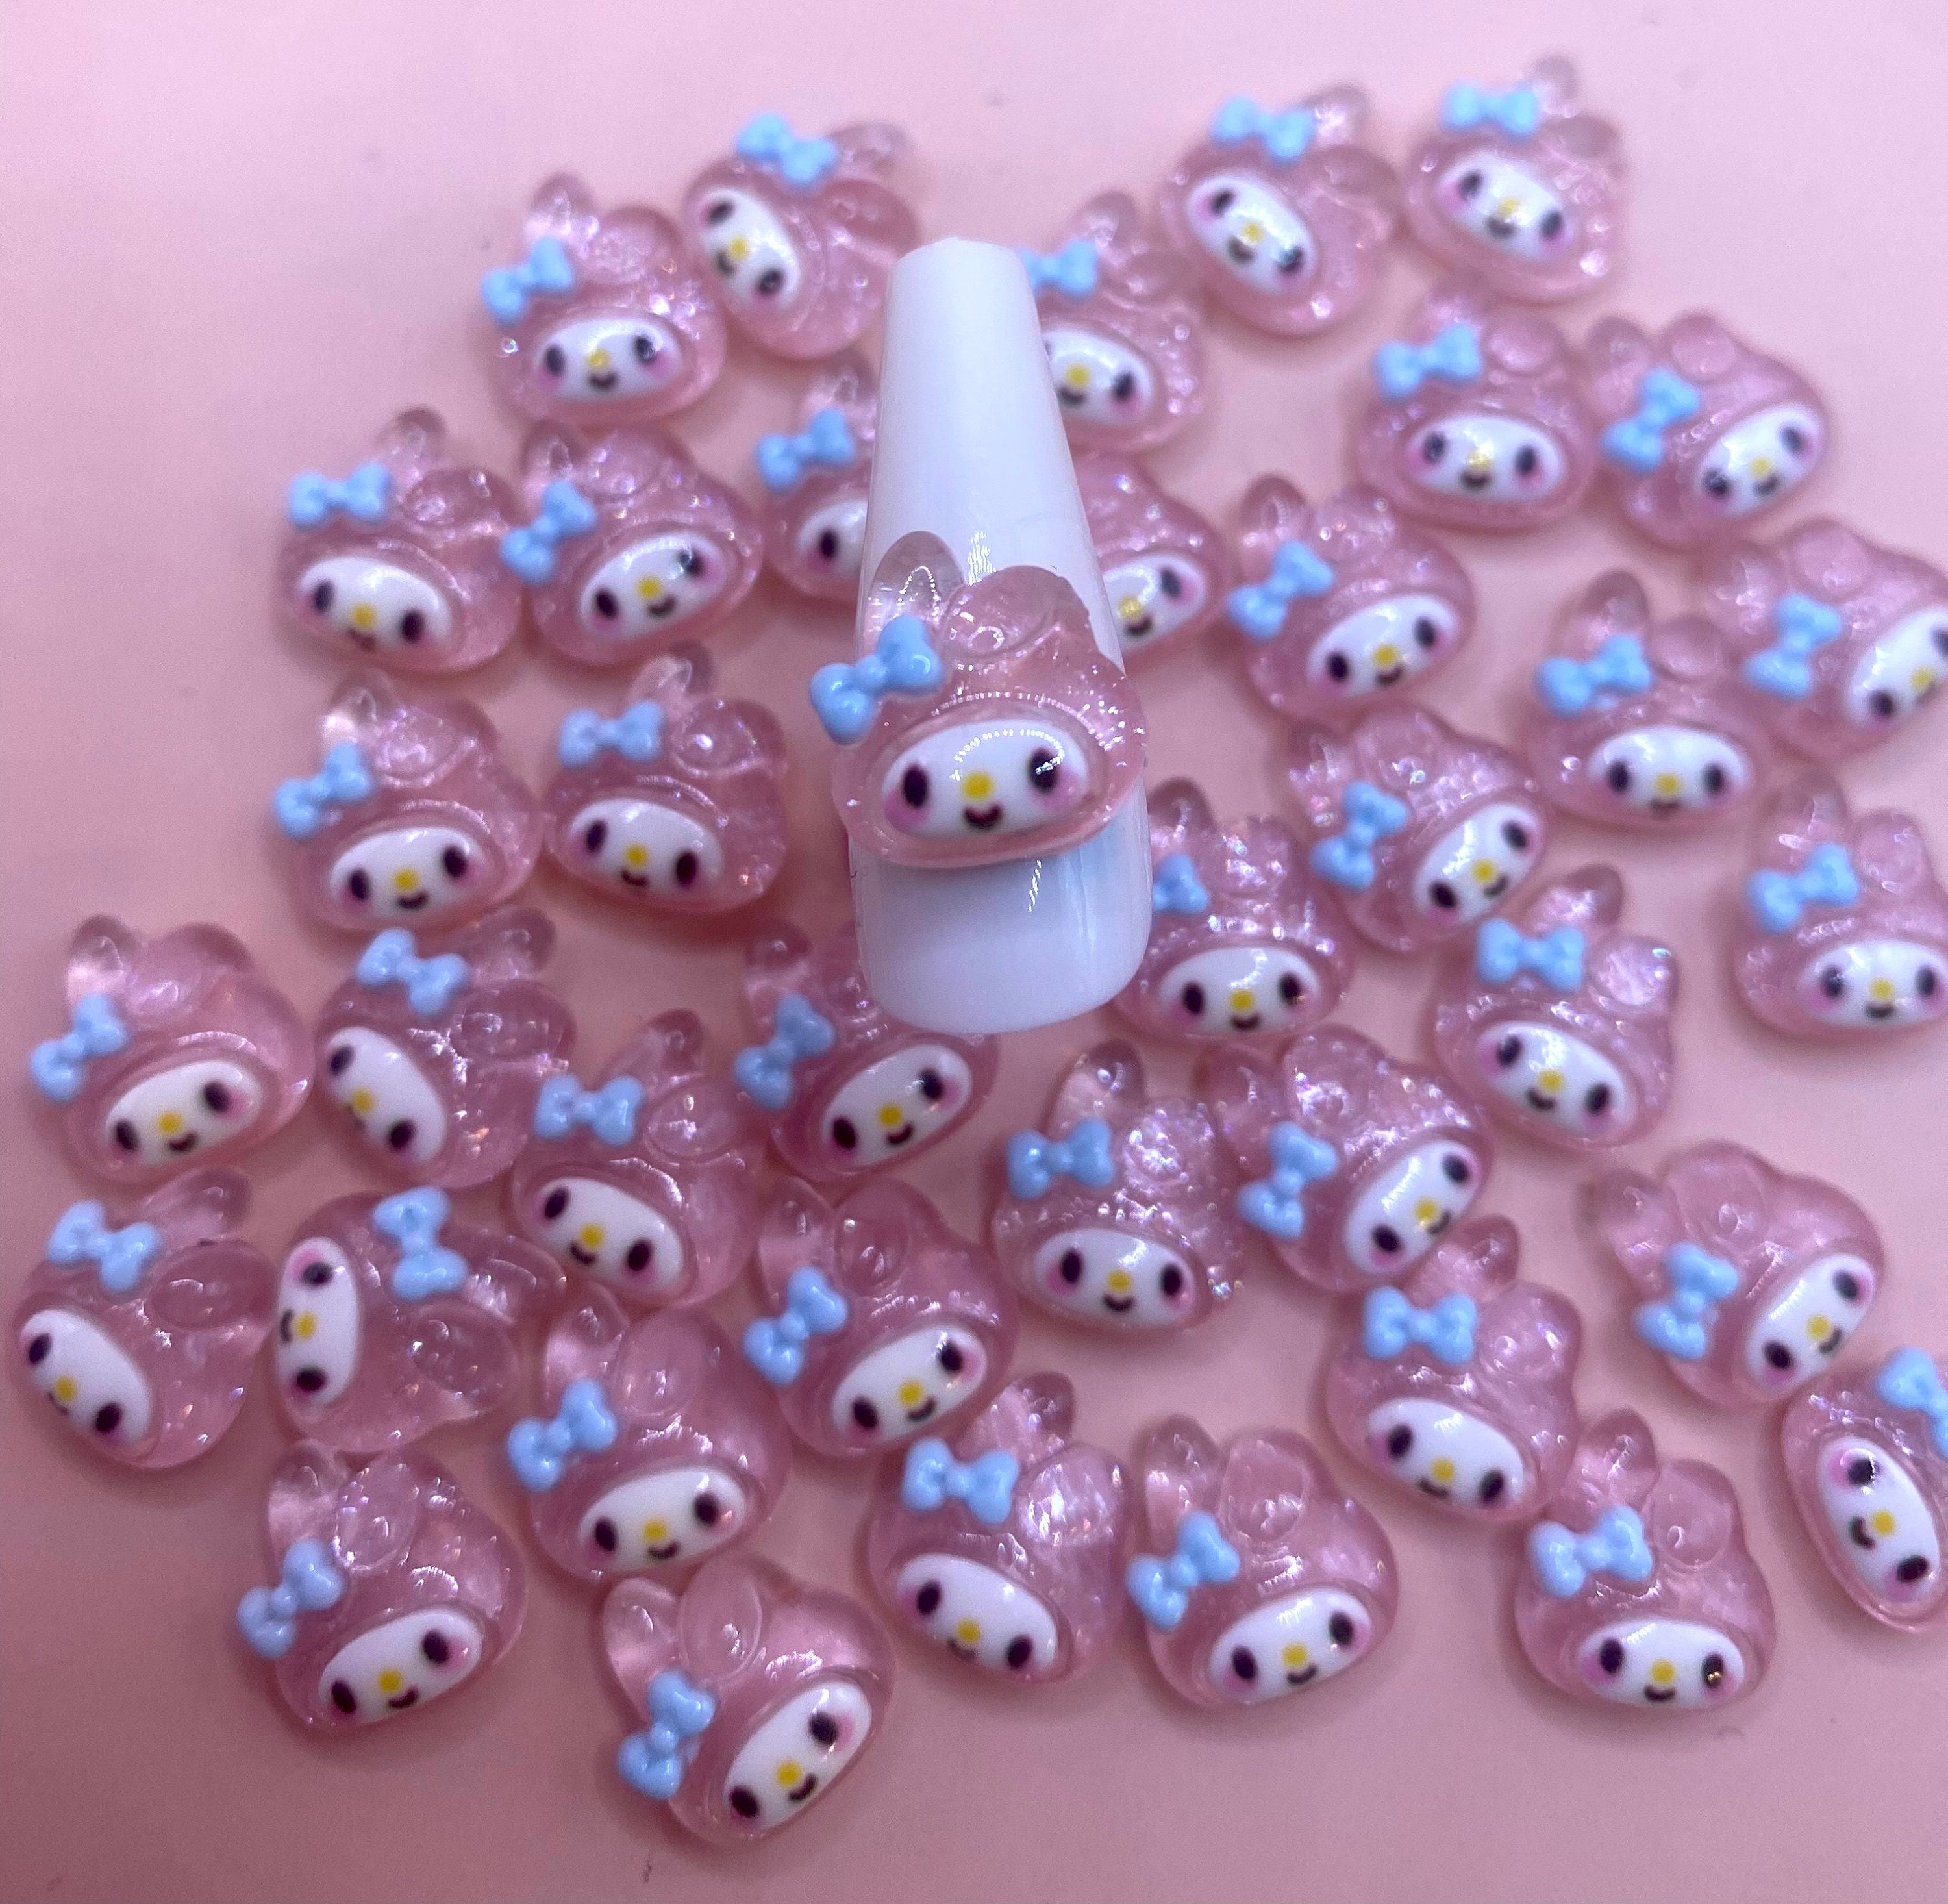 10pcs Kawaii Hello Kitty Nail Charms - Small Size 1cm Each - Free Ship!